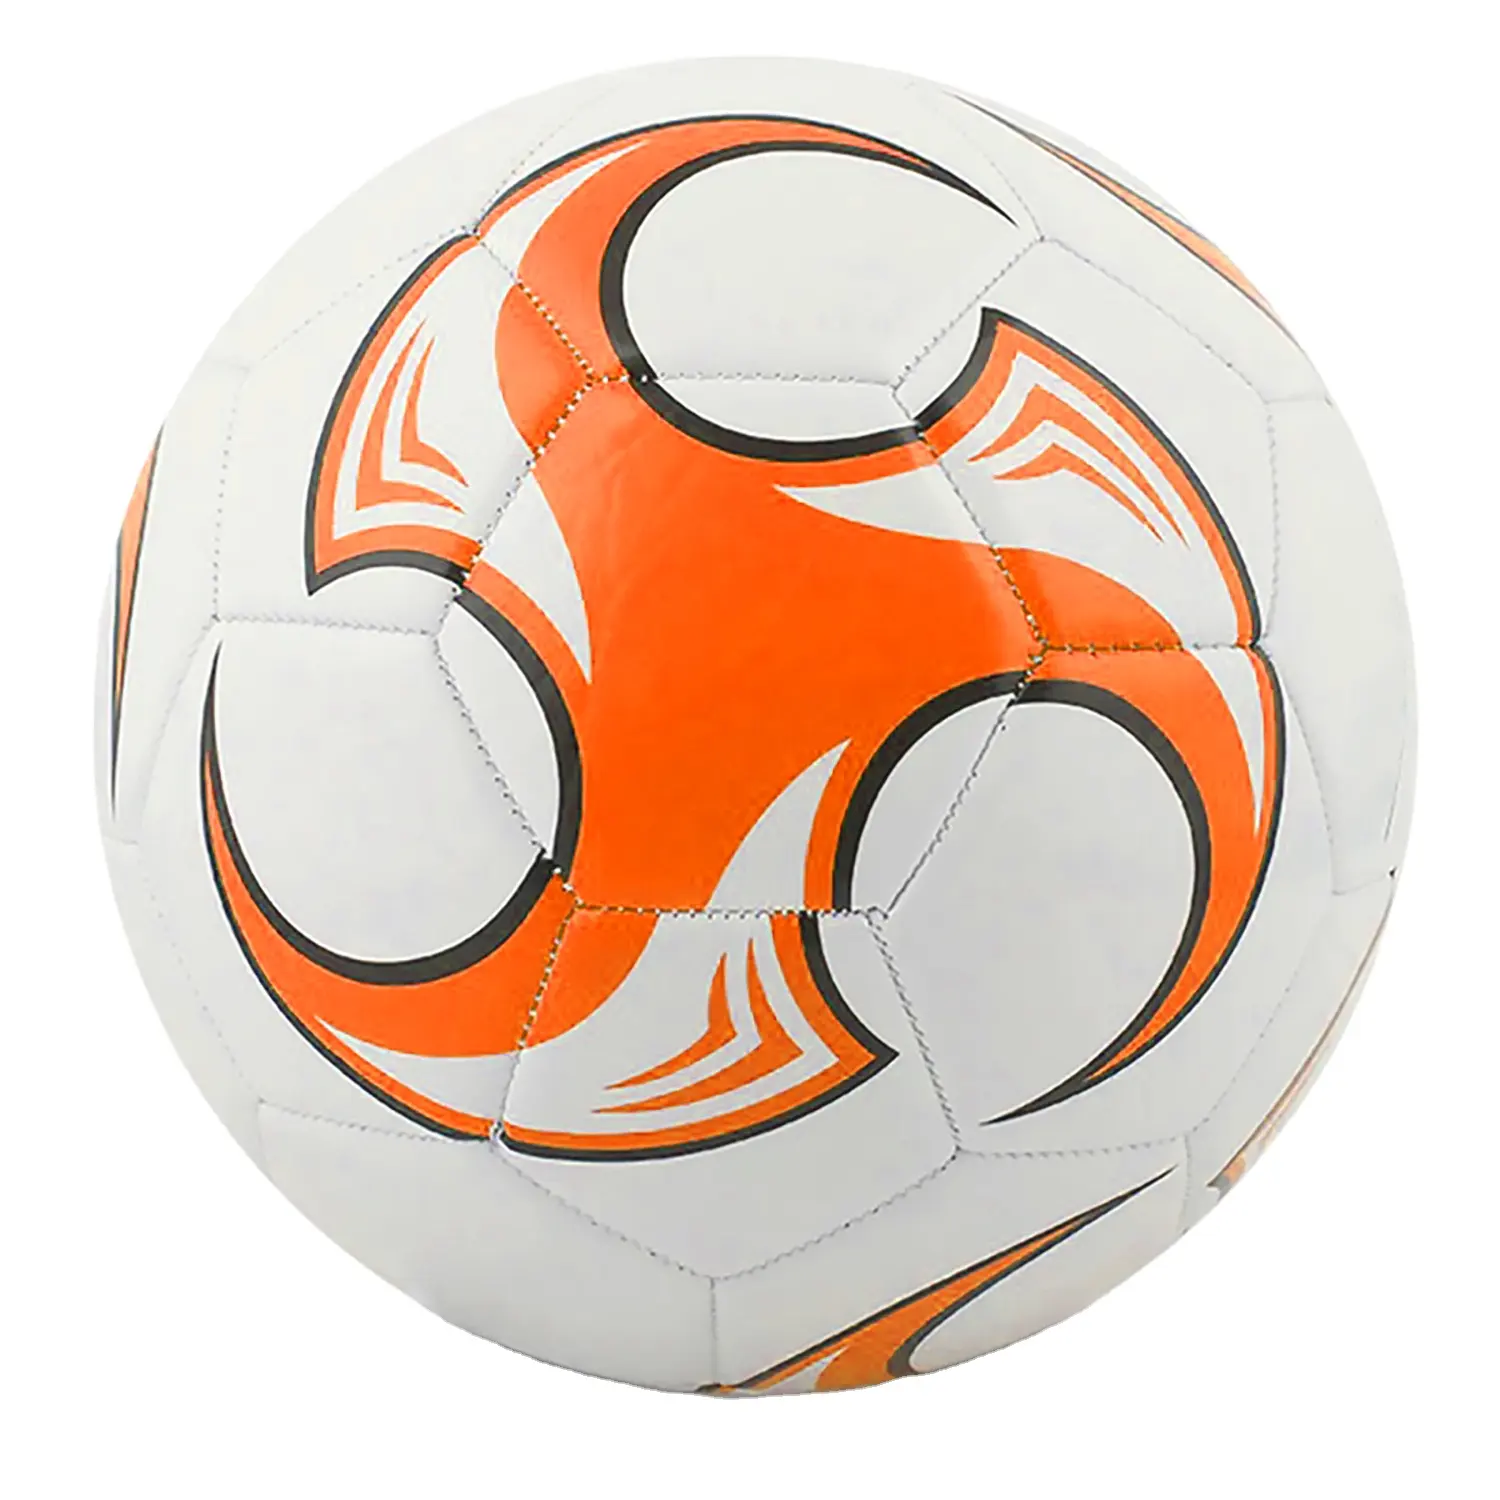 New Premier PVC Machine Sew Soccer Balls Goal Team Match Training Balls League Customized Professional Soccer Balls Alta qualidade